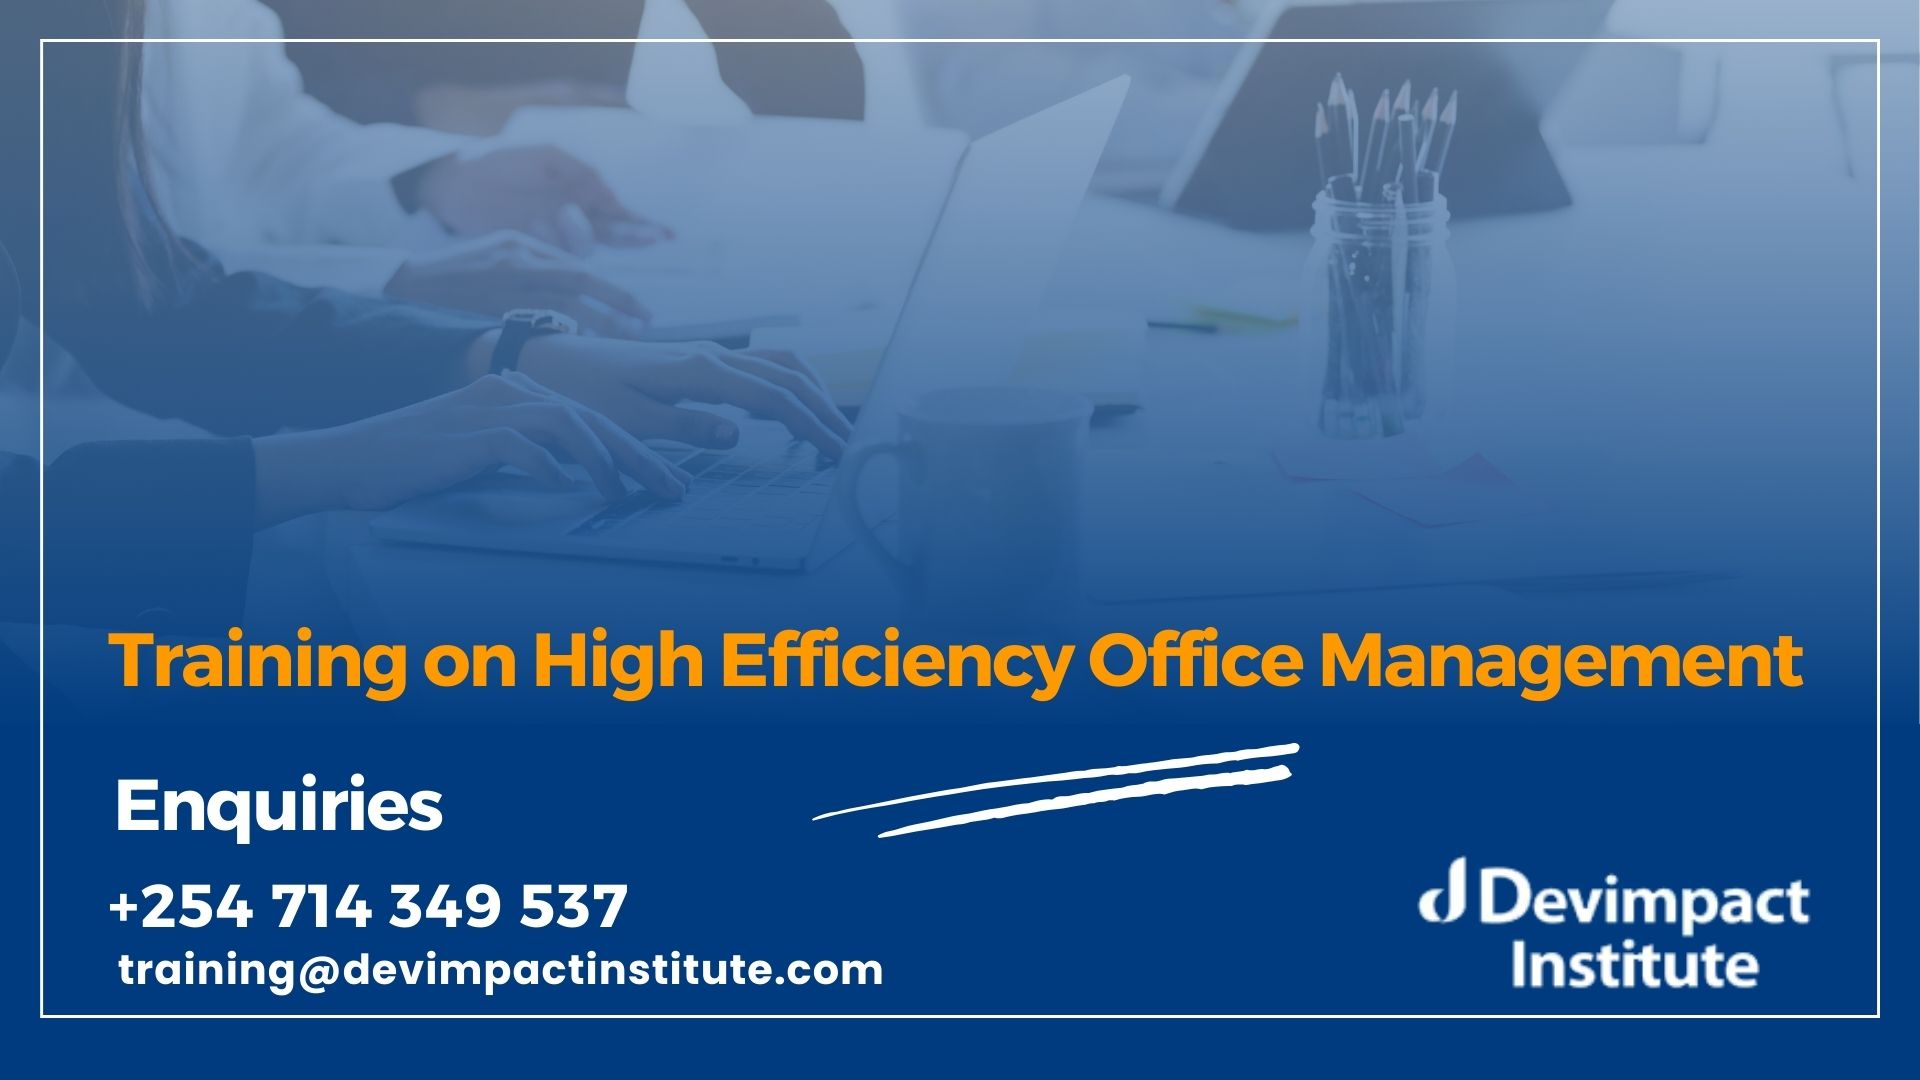 Training on High Efficiency Office Management, Devimpact Institute, Nairobi, Kenya